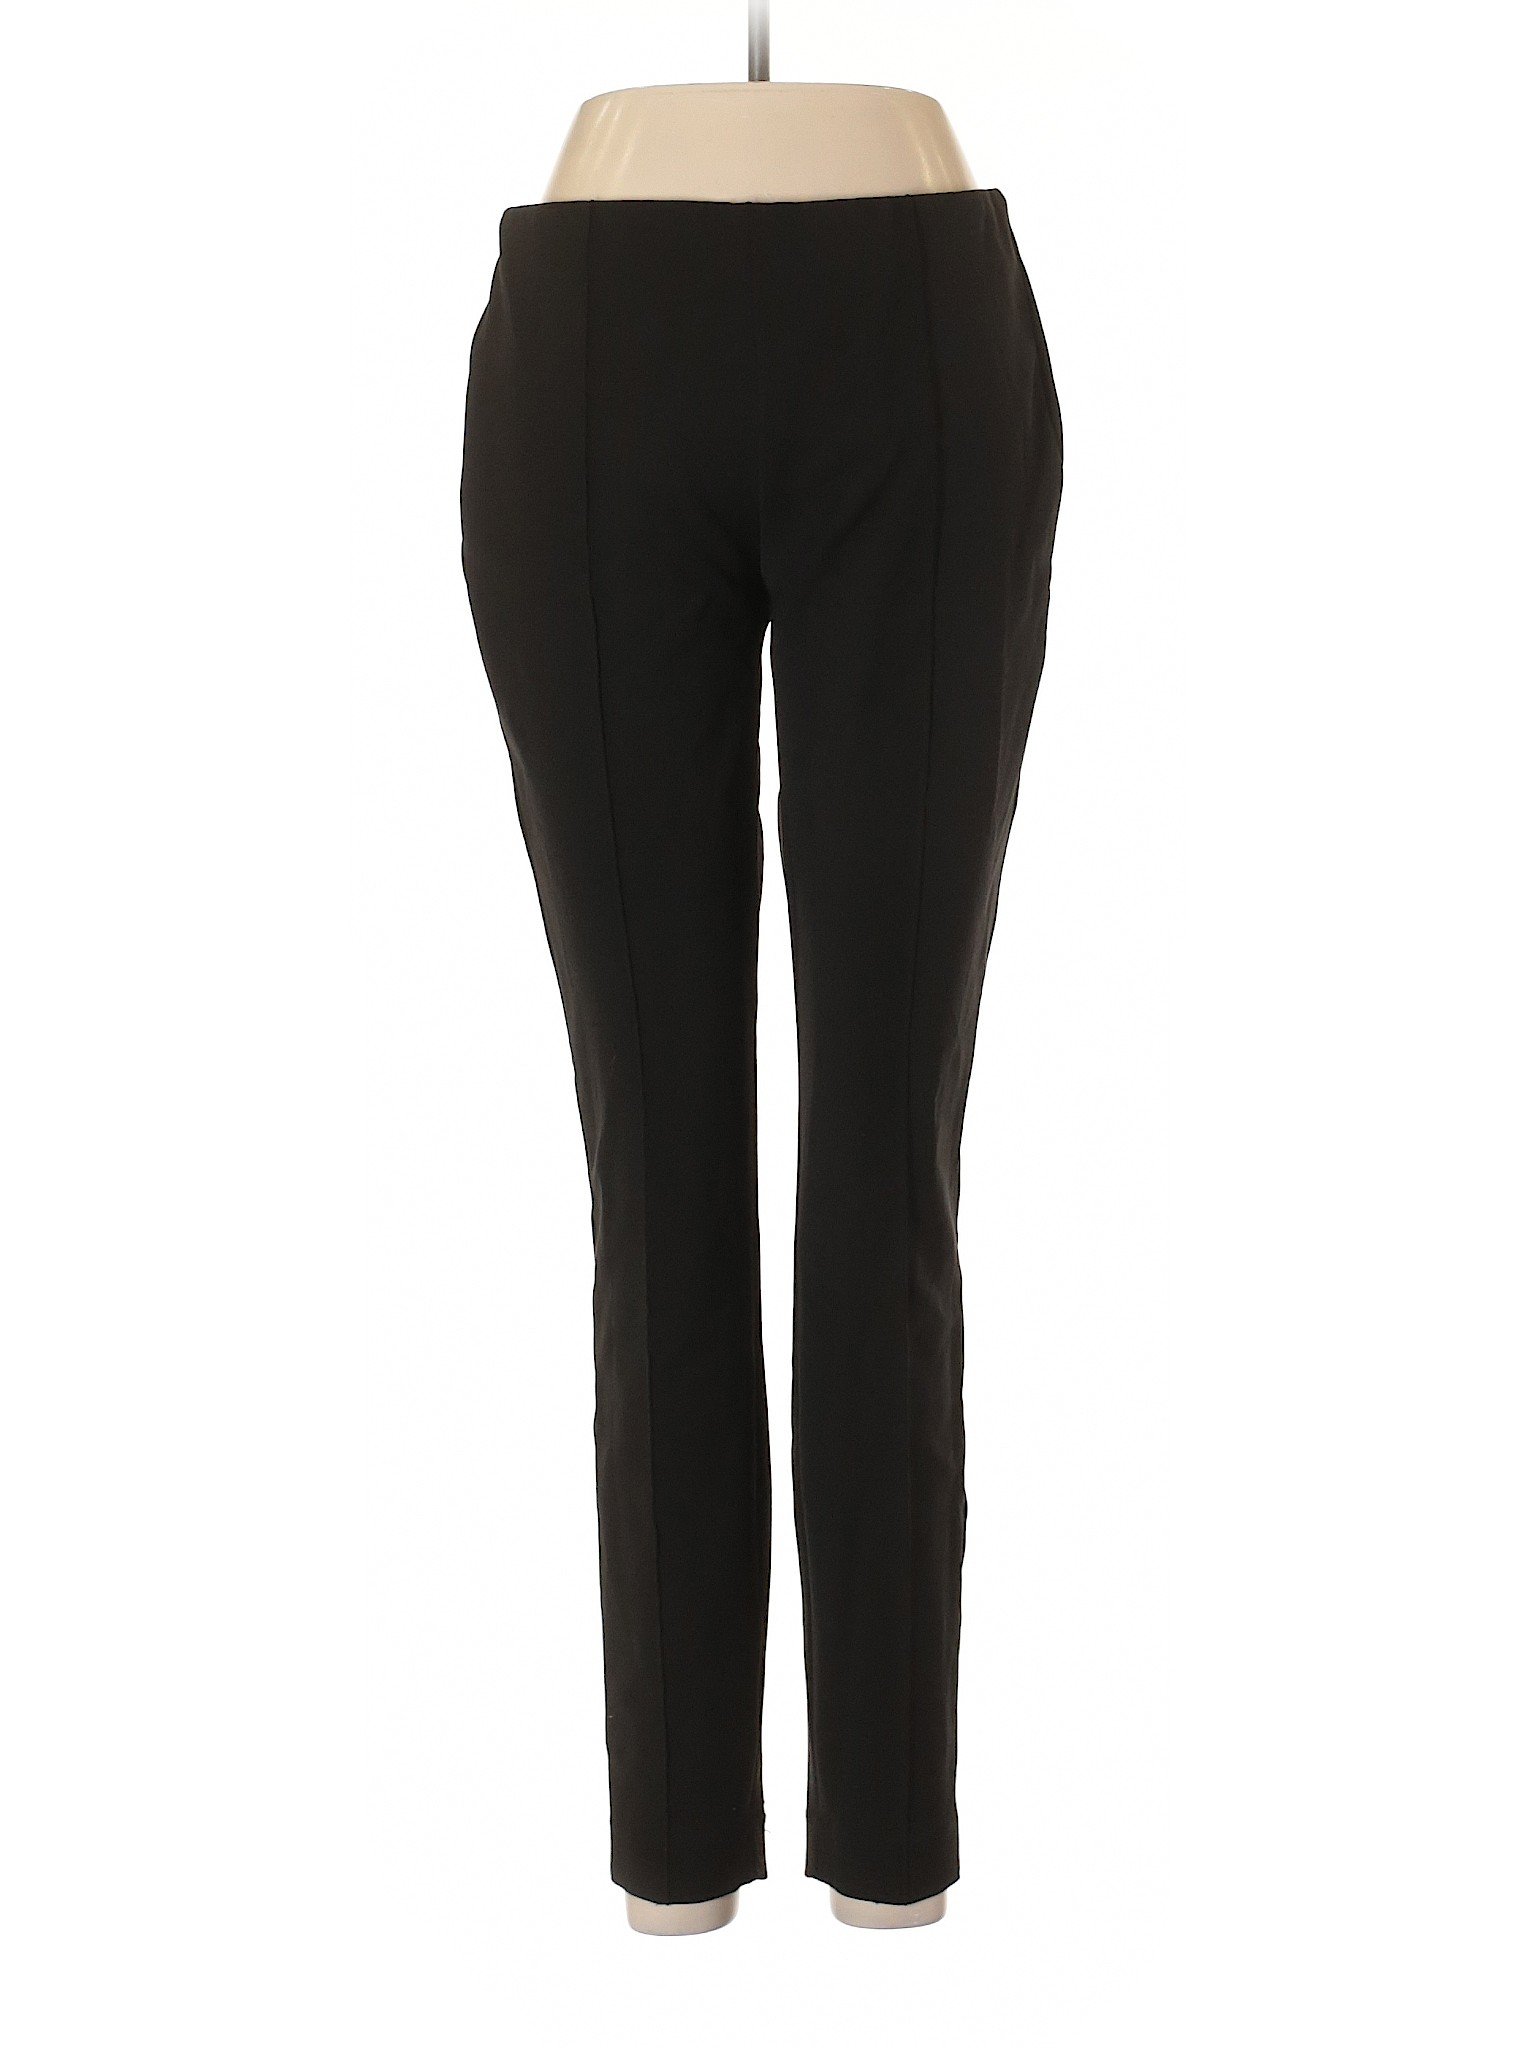 Express Women Black Casual Pants S | eBay